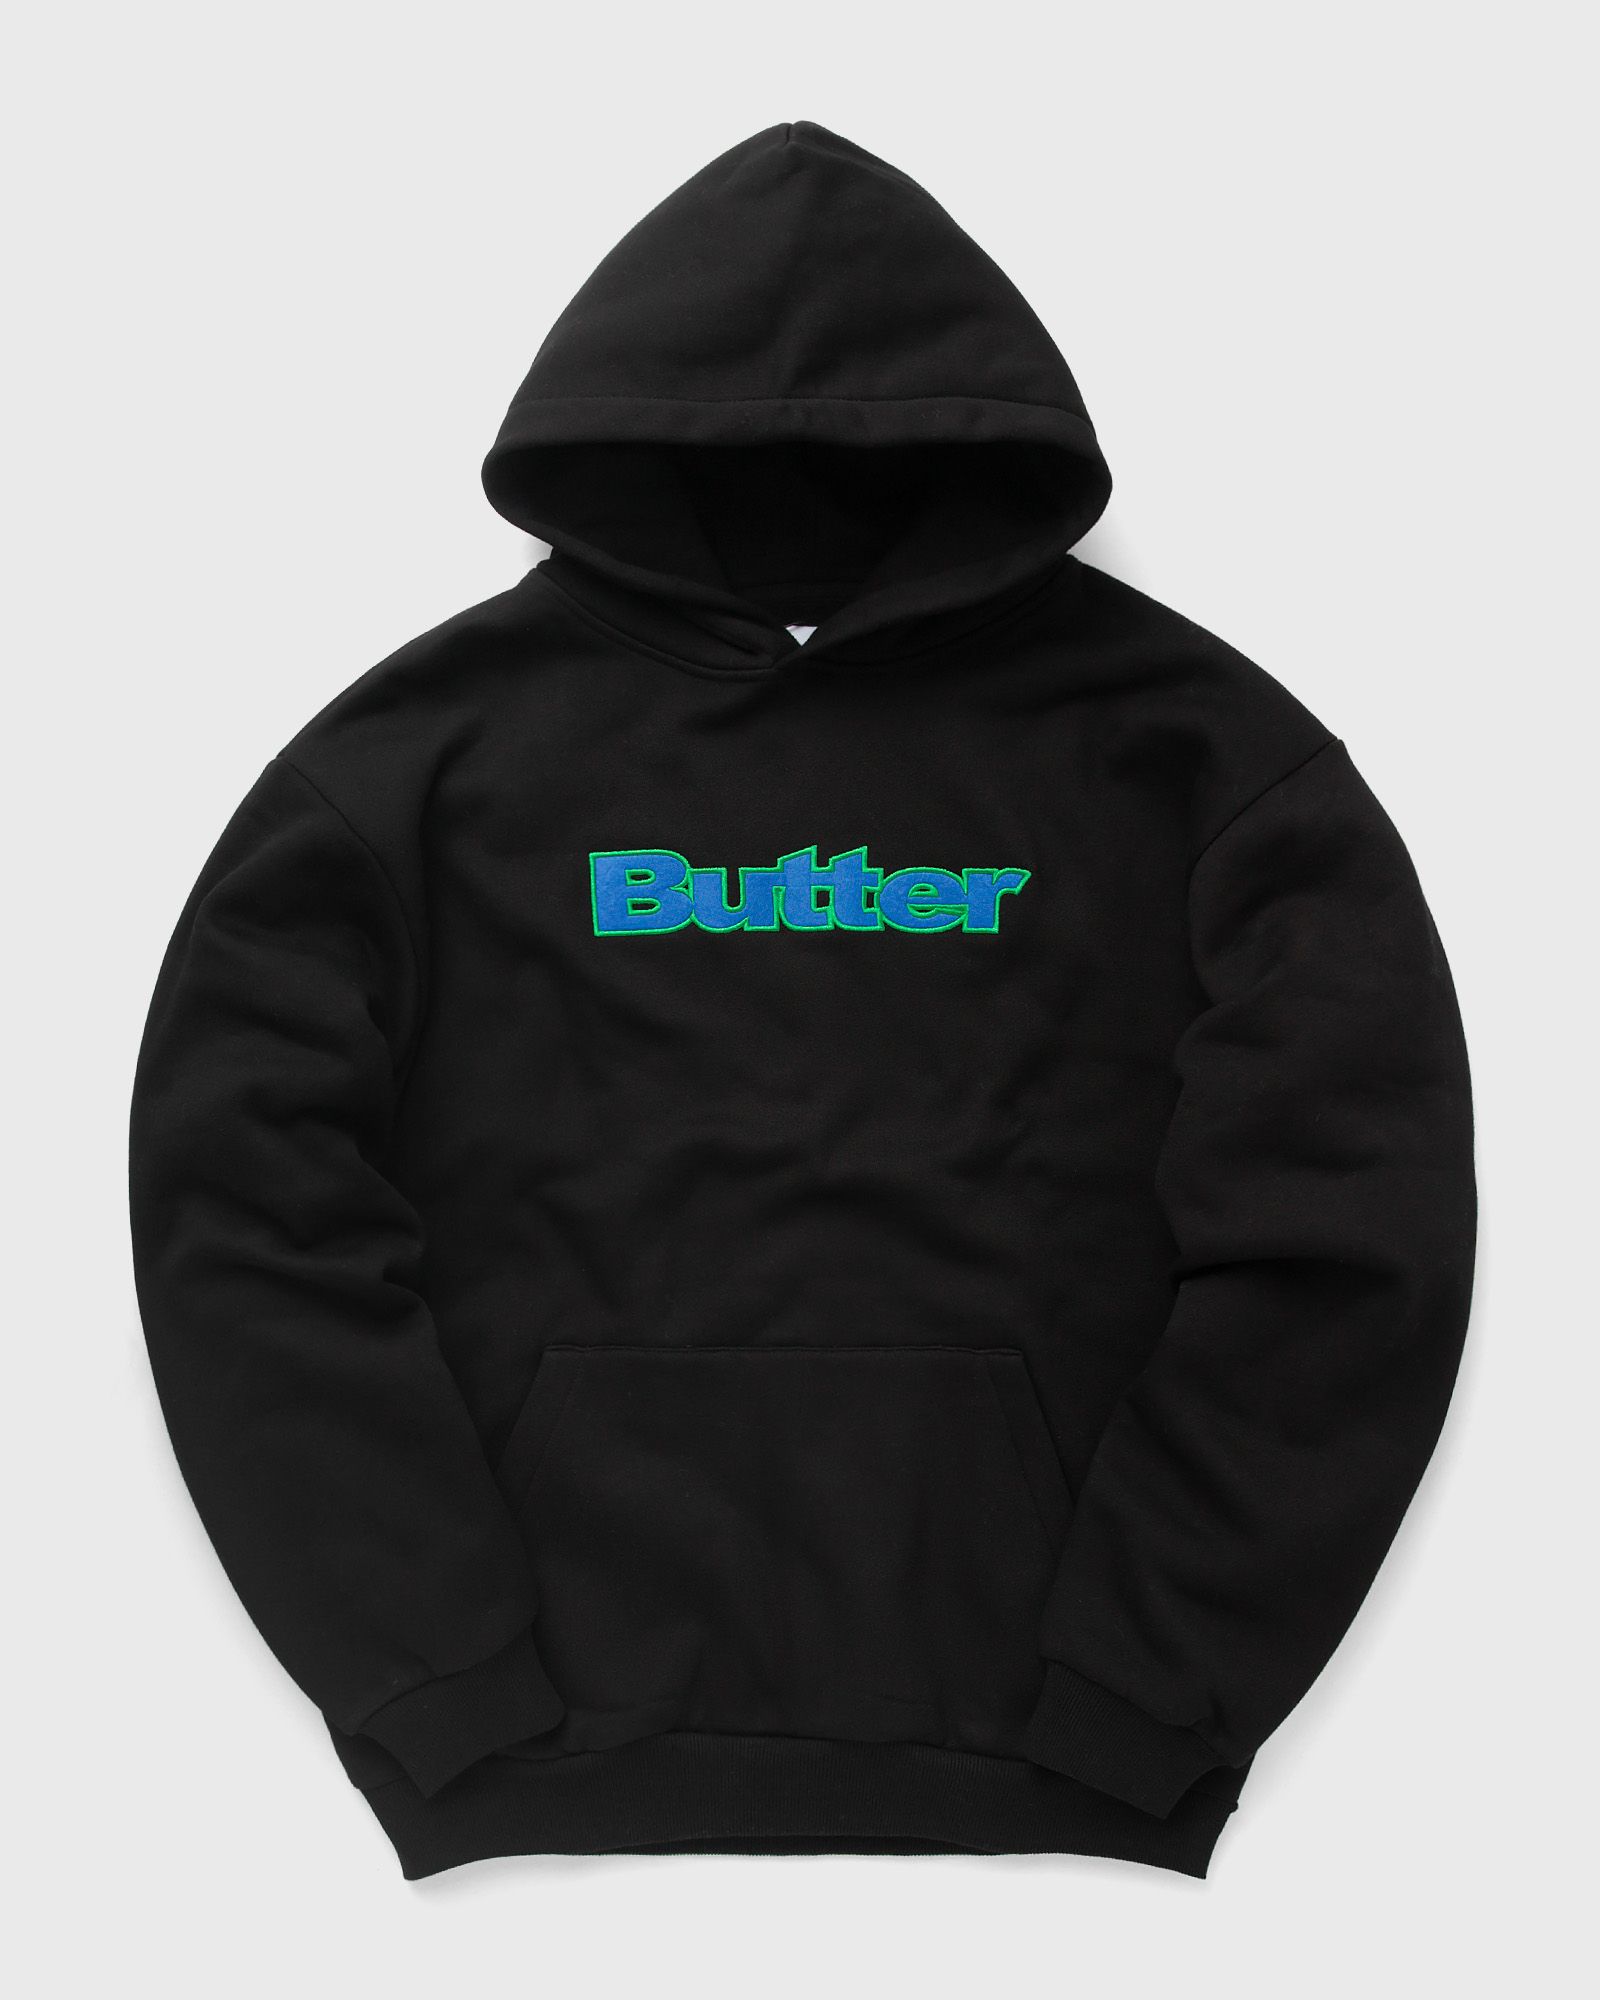 Butter Goods - felt logo applique pullover hood men hoodies black in größe:s